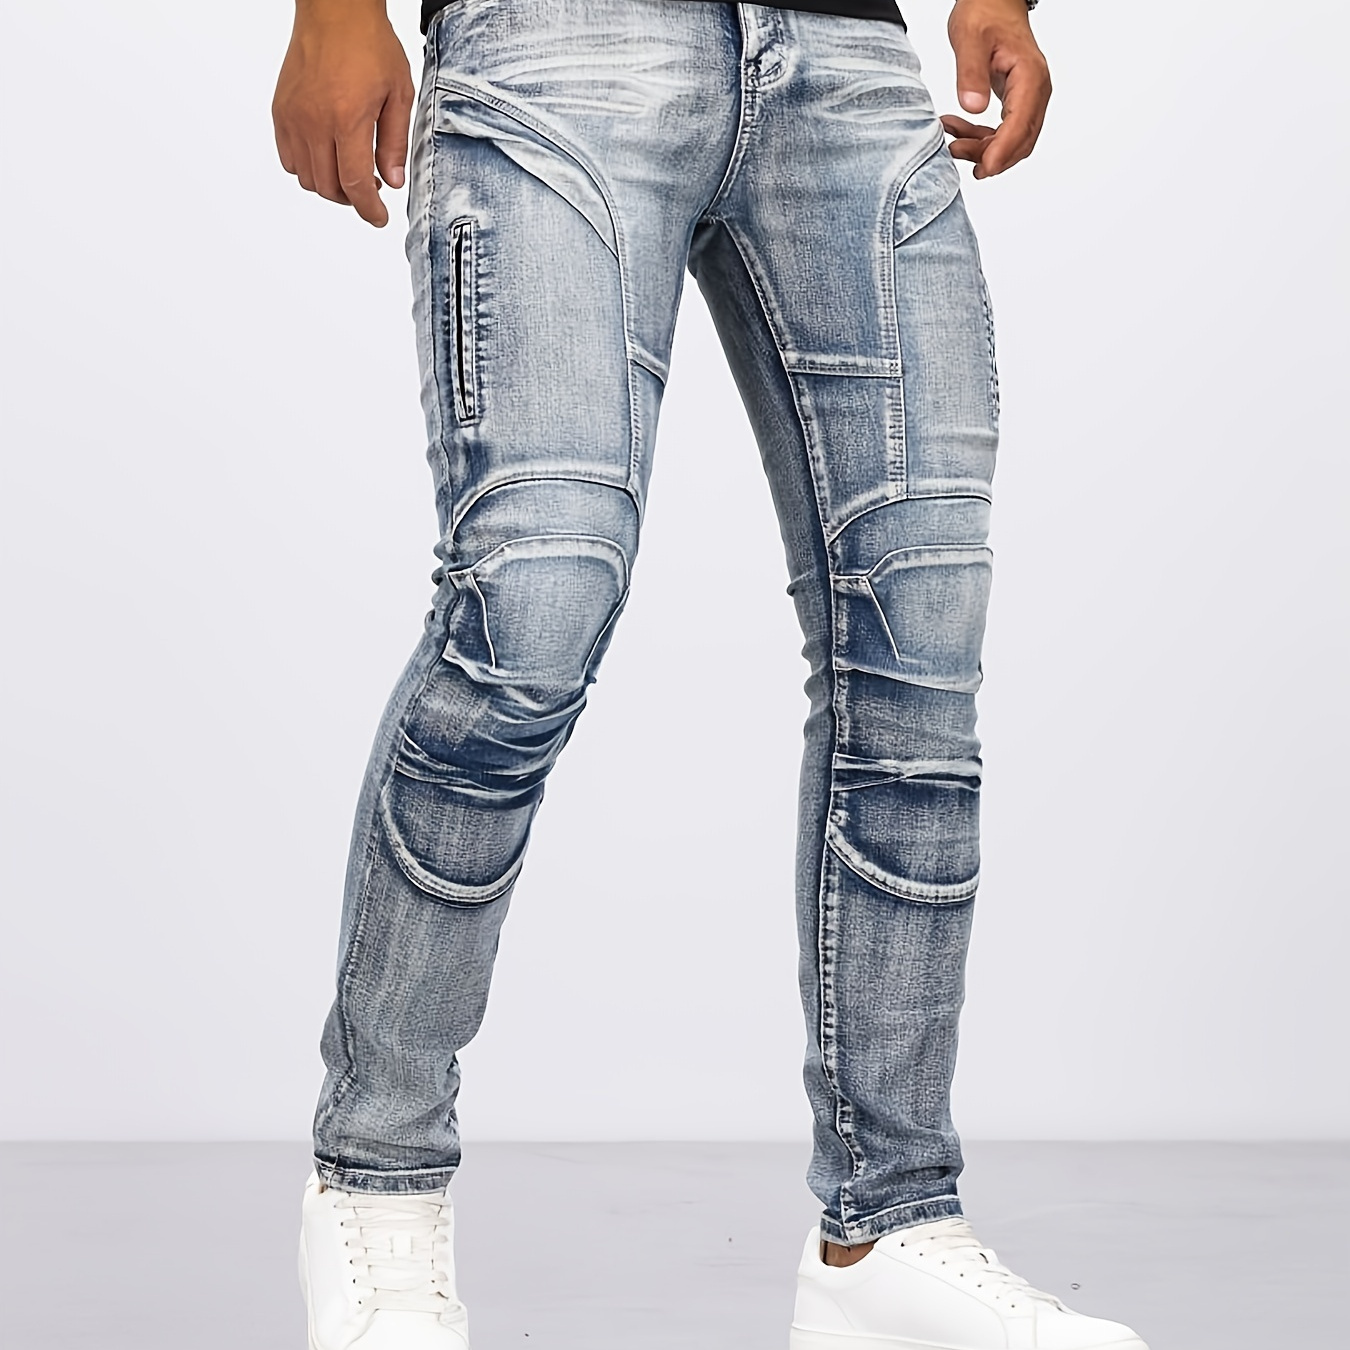 

Men's Casual Skinny Biker Jeans, Chic Street Style Stretch Denim Pants